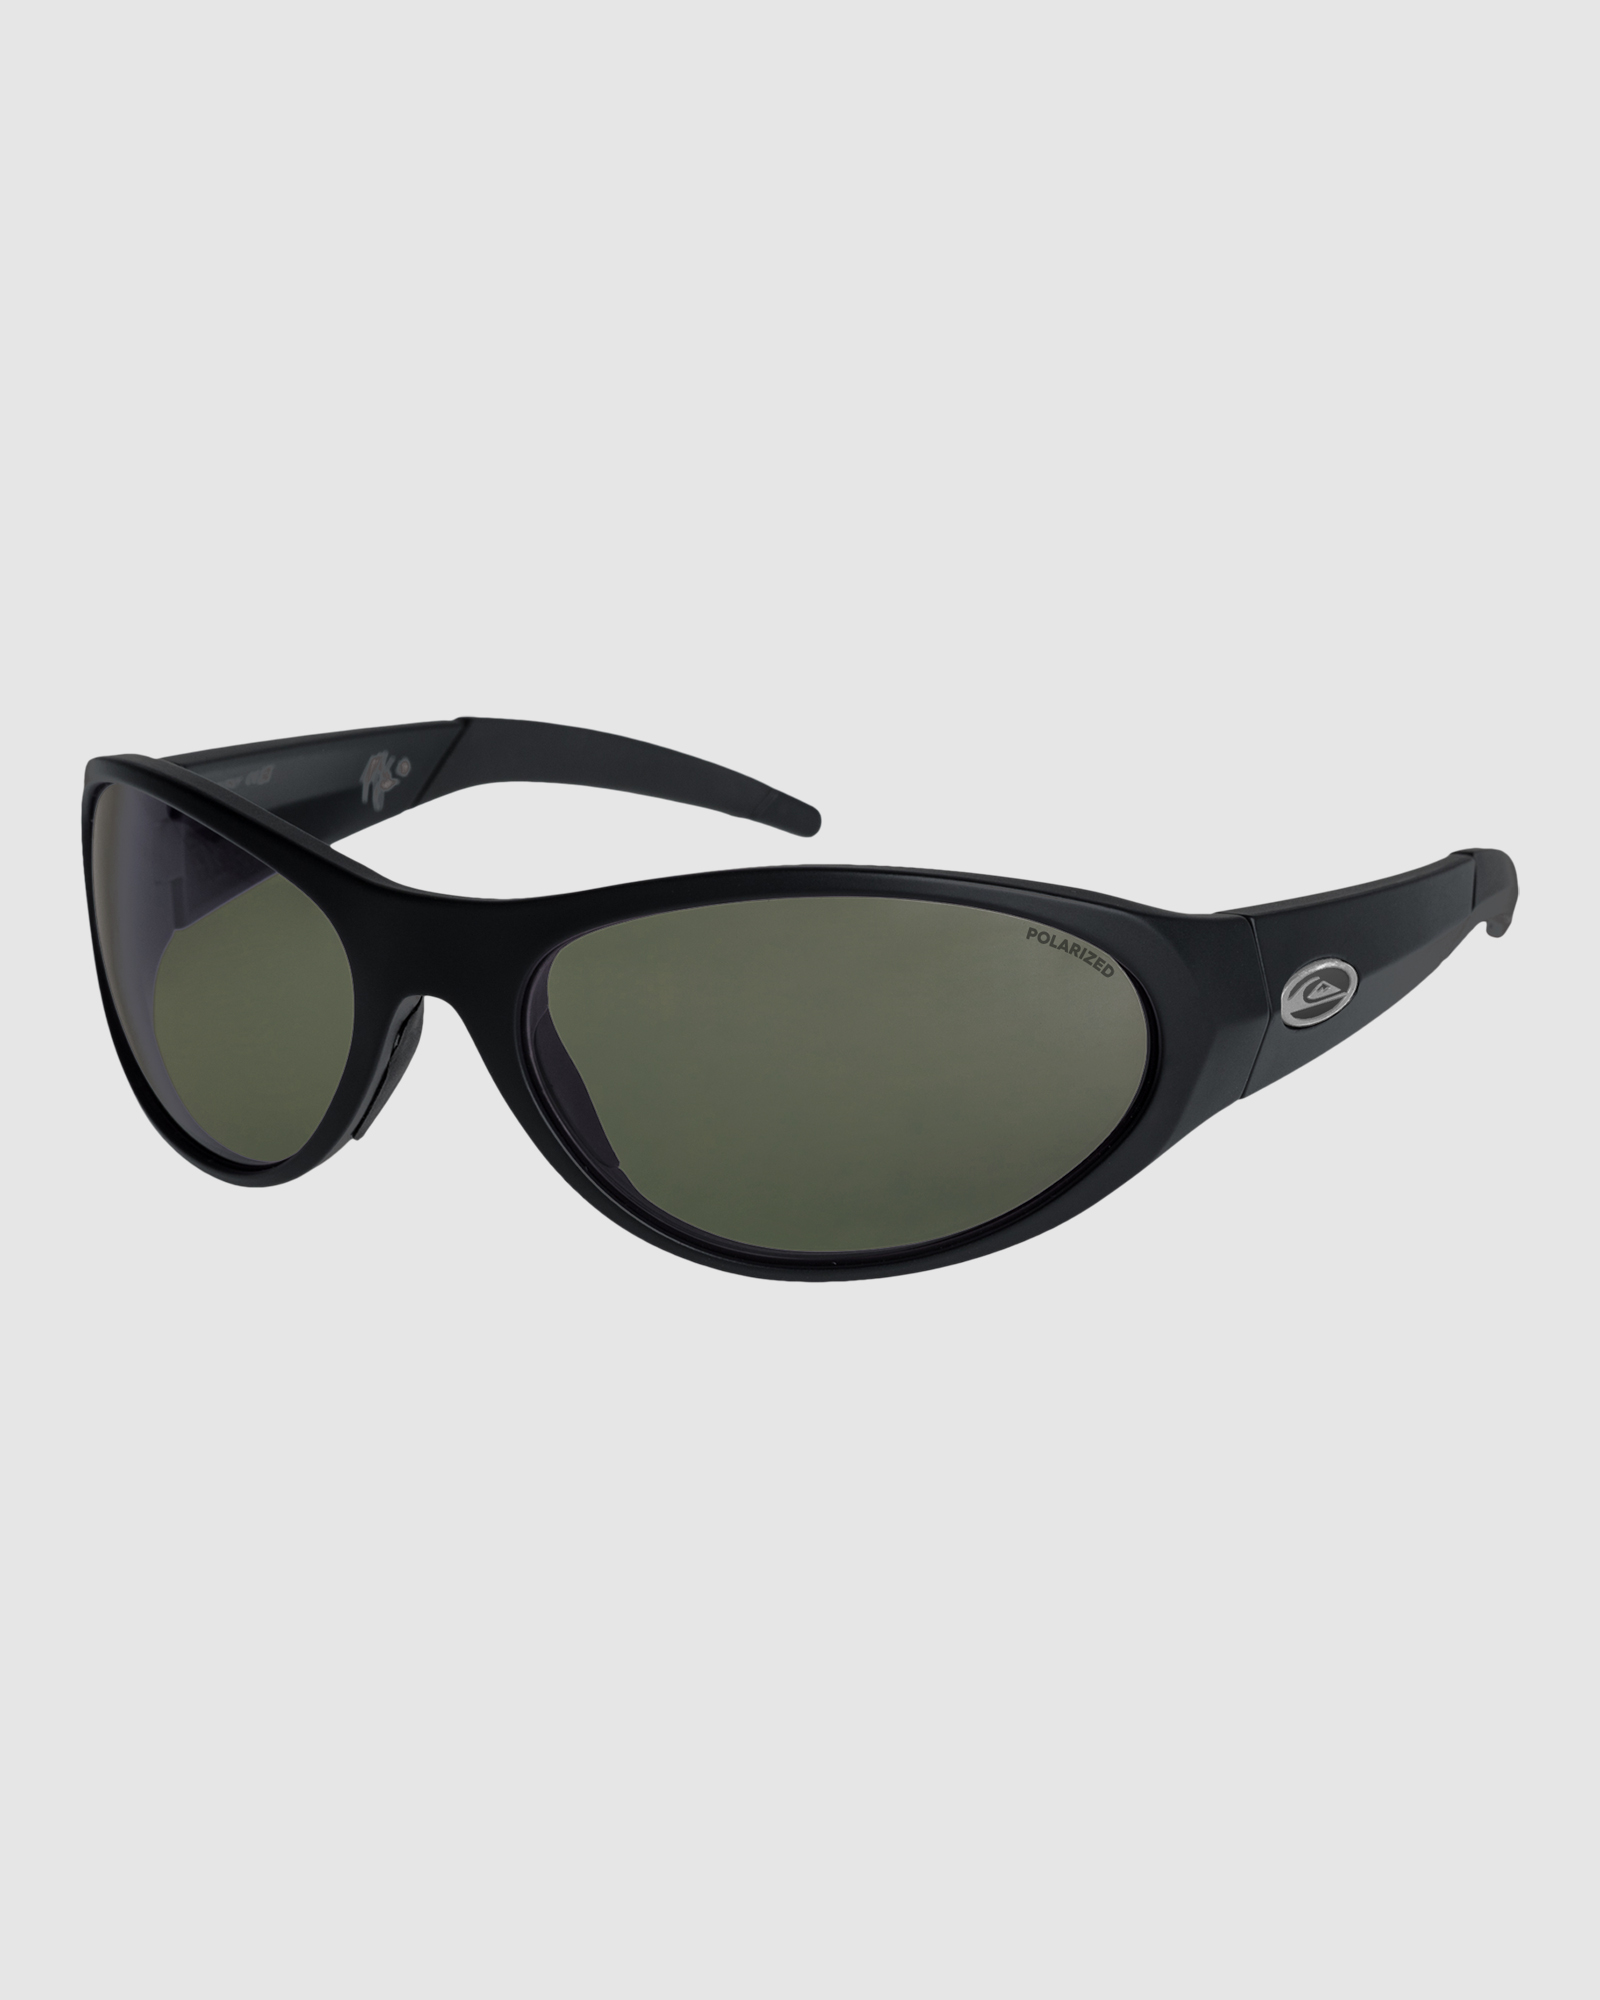 Plz | For Polarised Sunglasses SurfStitch Quiksilver Men - - Green Ellipse P Black